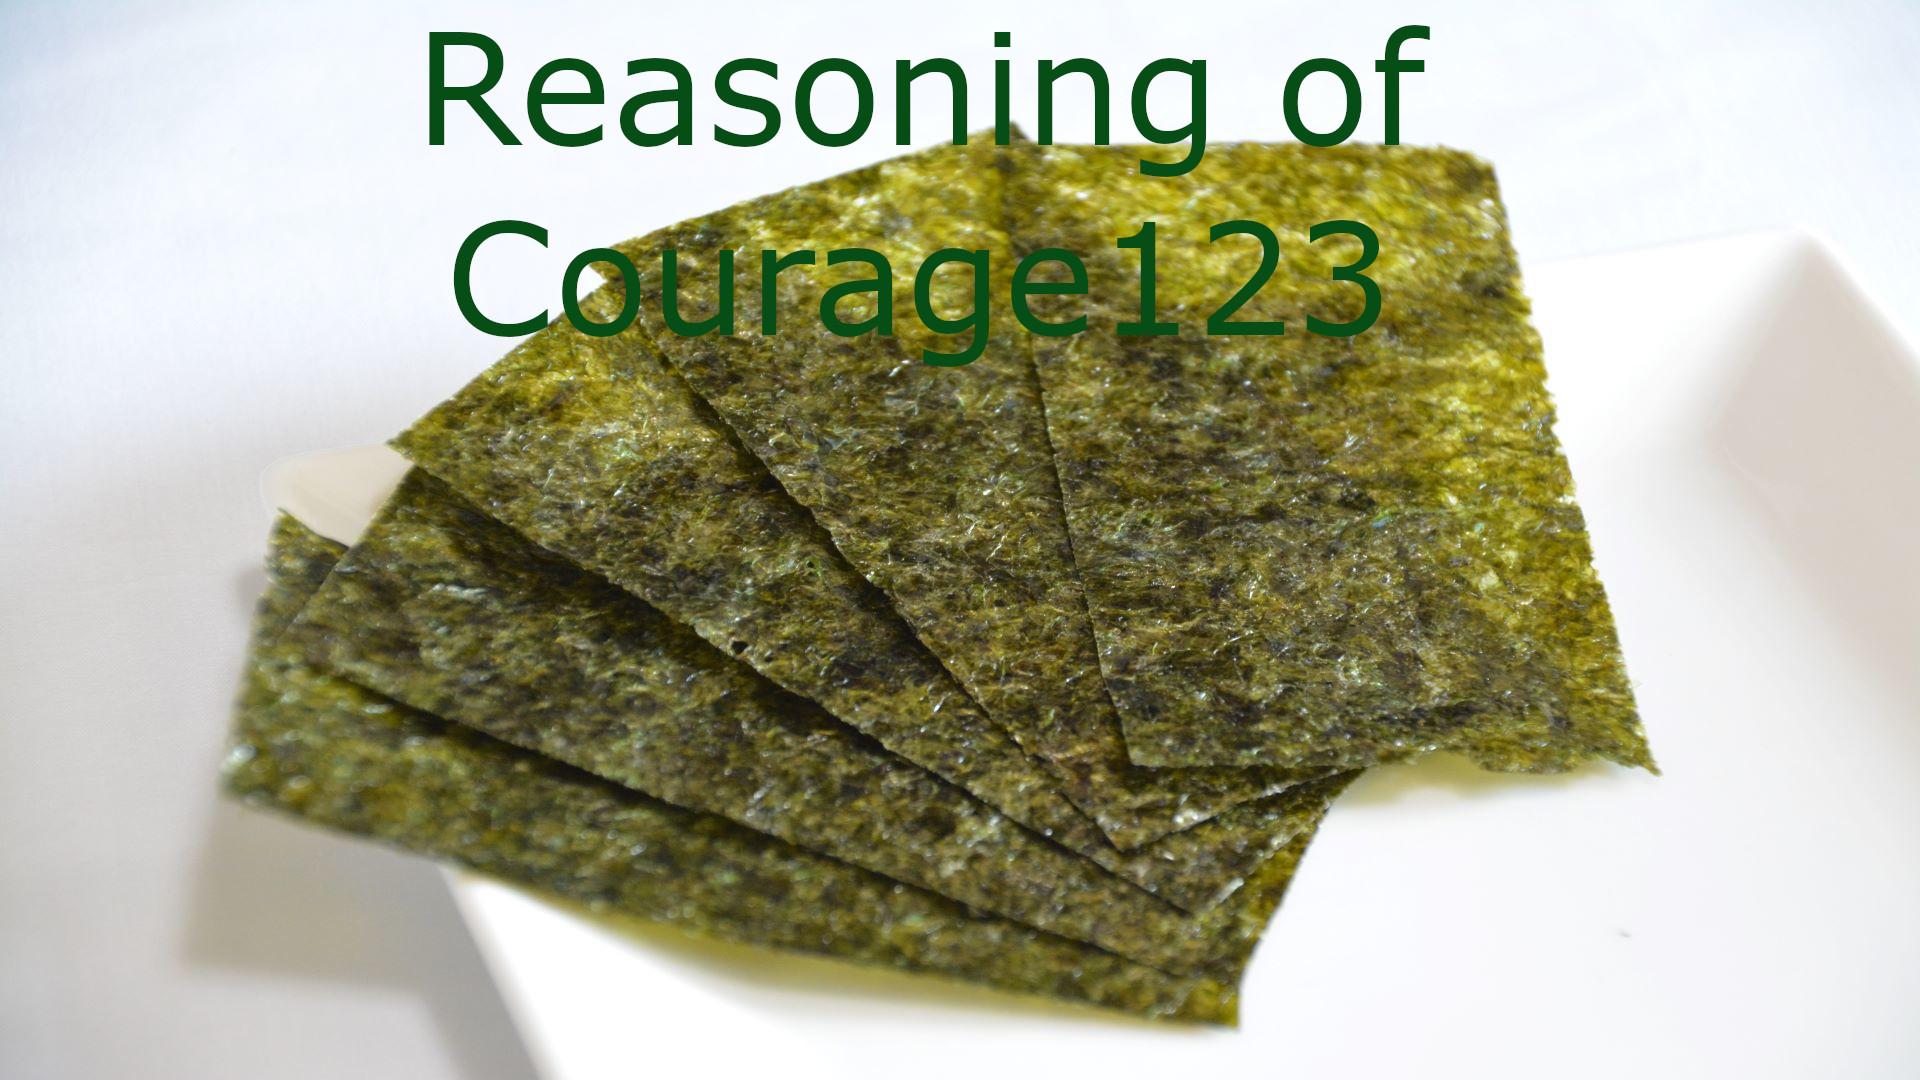 Reasoning of Courage123